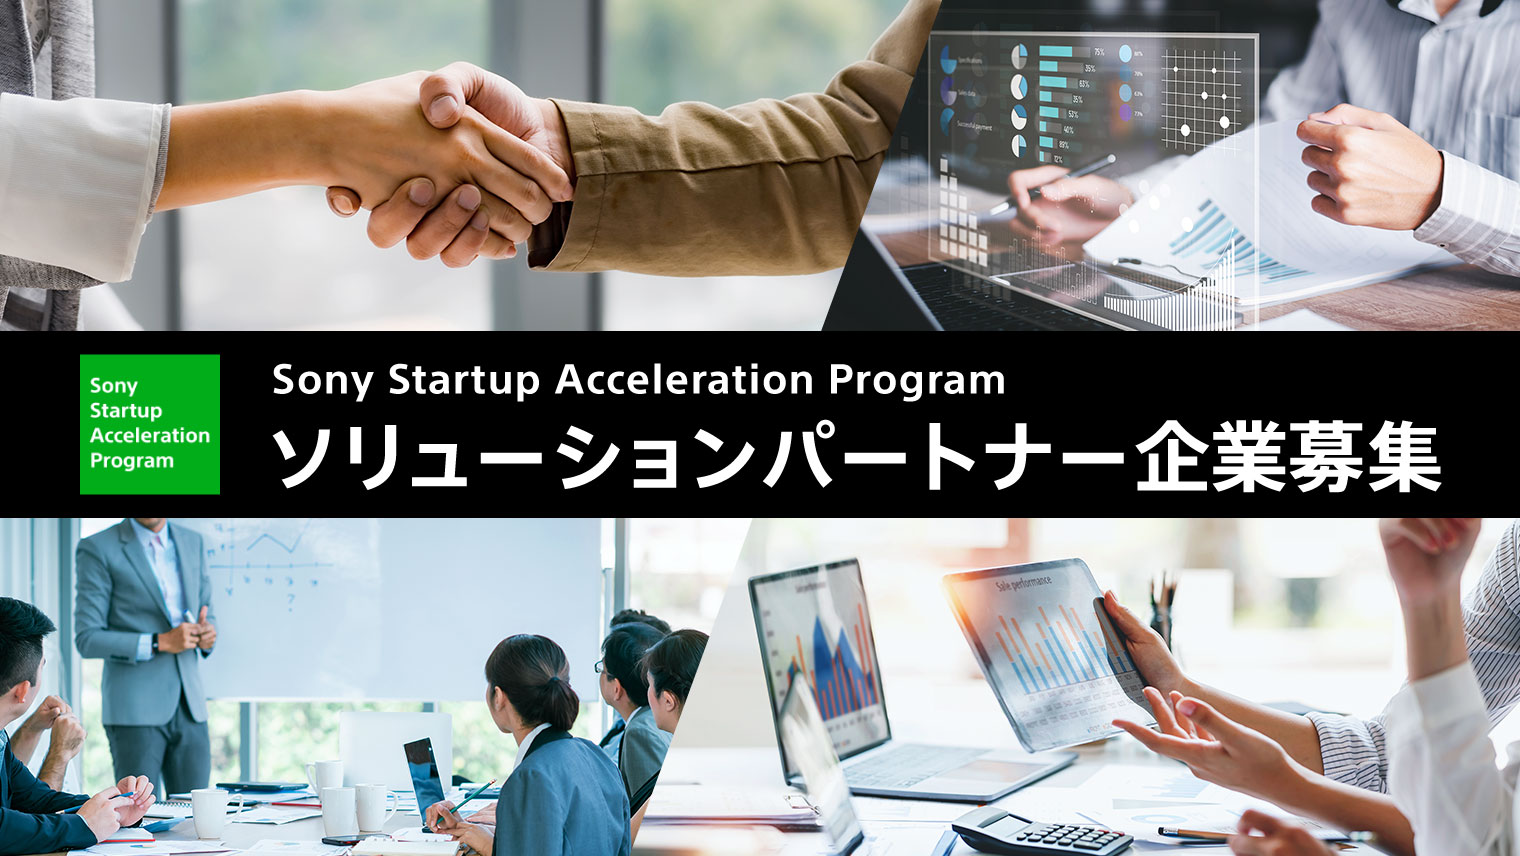 Sony Startup Acceleration Program ソリューションパートナー募集